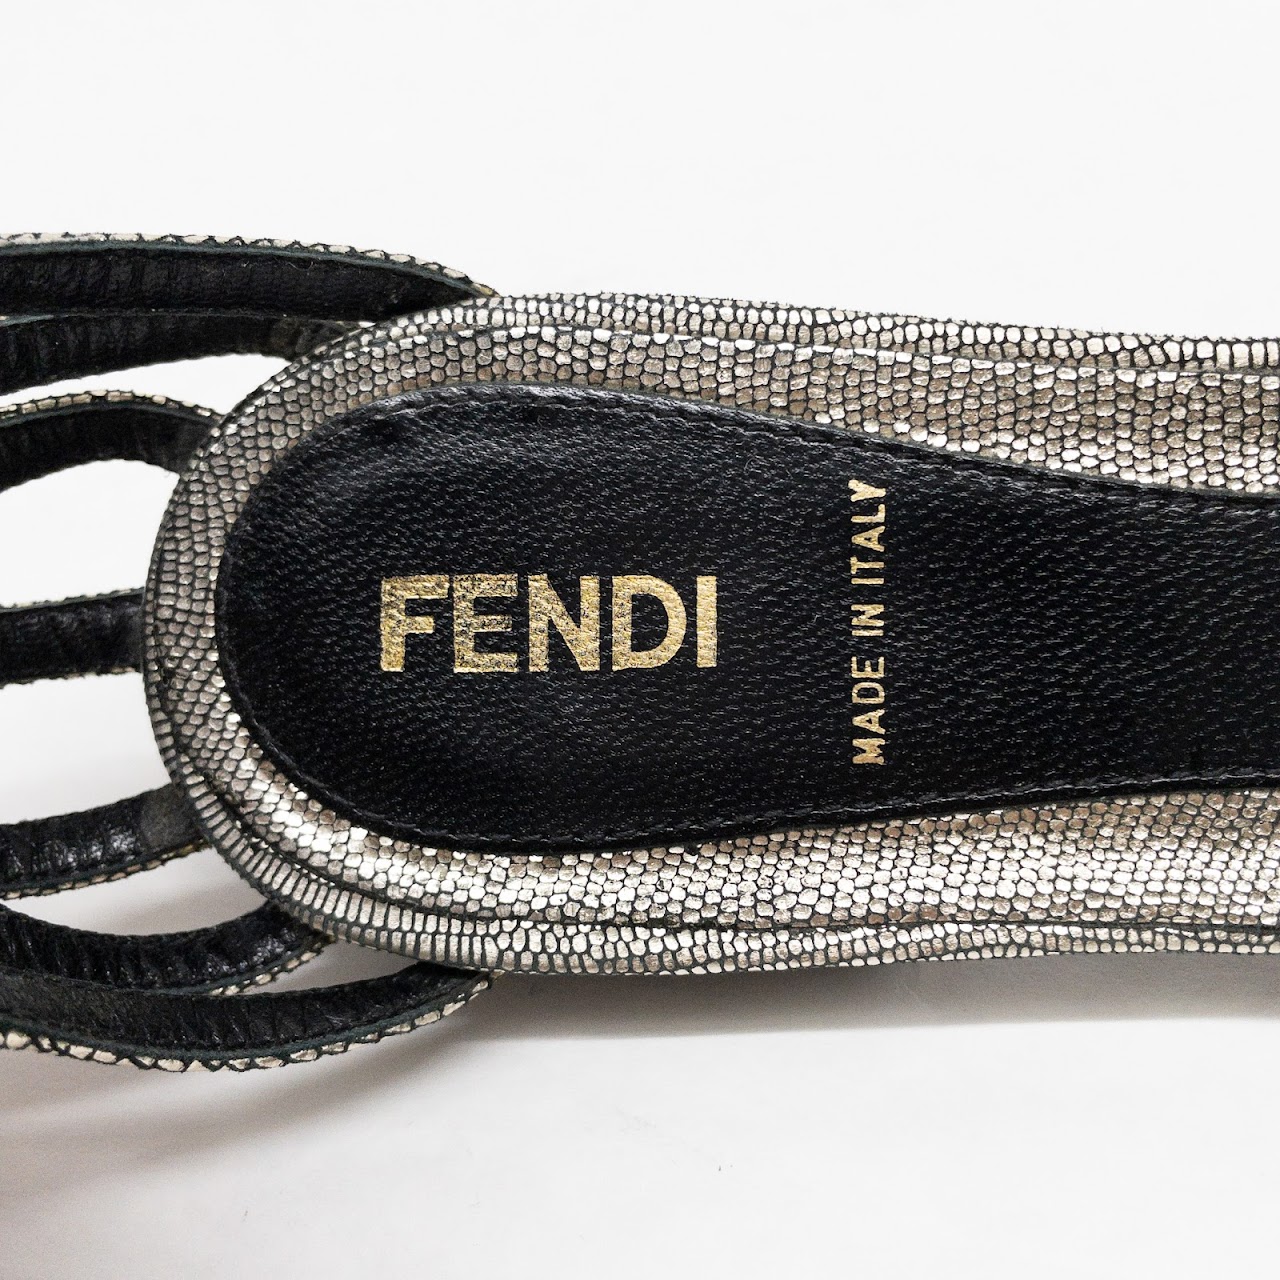 Fendi Metallic Sandals